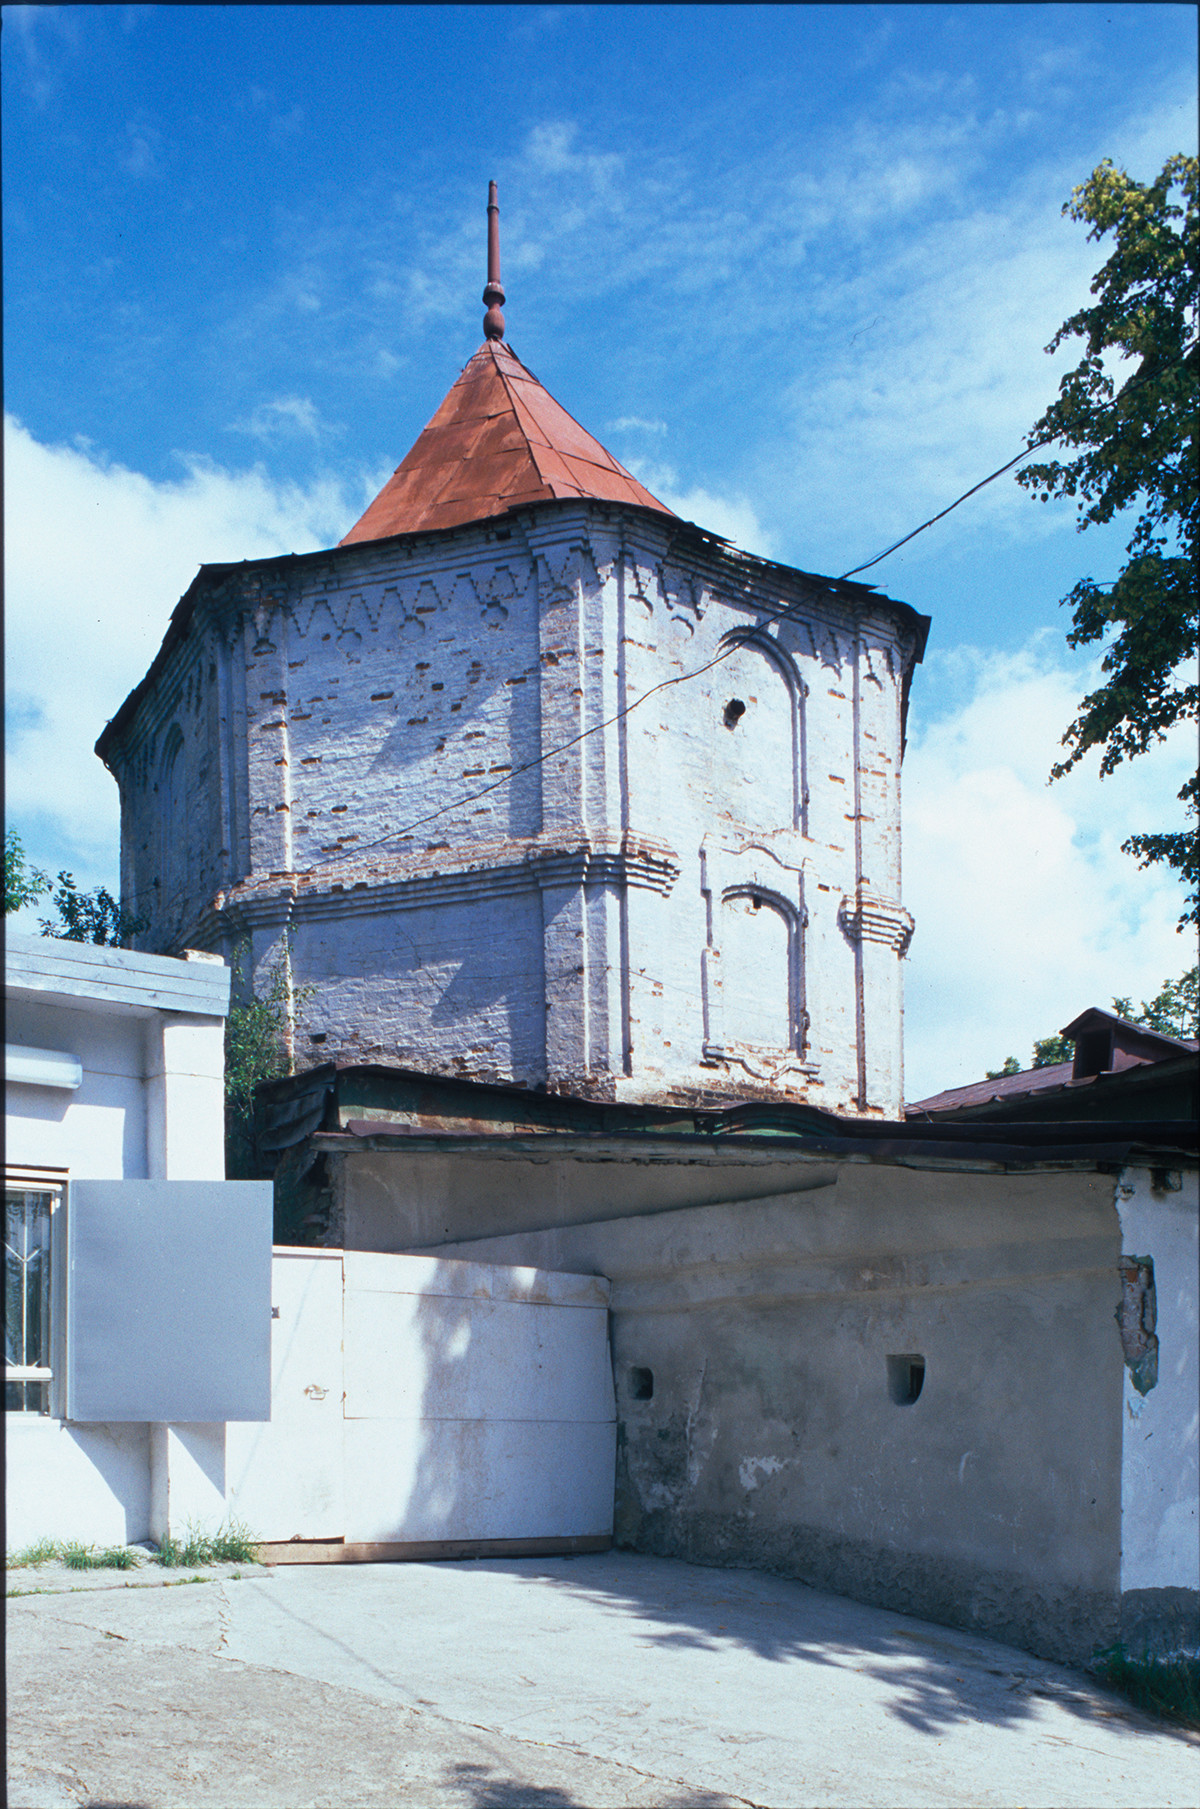 Stolp na nekdanjem posestvu Demidovih v Kištimski tovarni. Zgrajen pb. 1760 po načrtih Nikite Demidova. 14. julij 2003.
